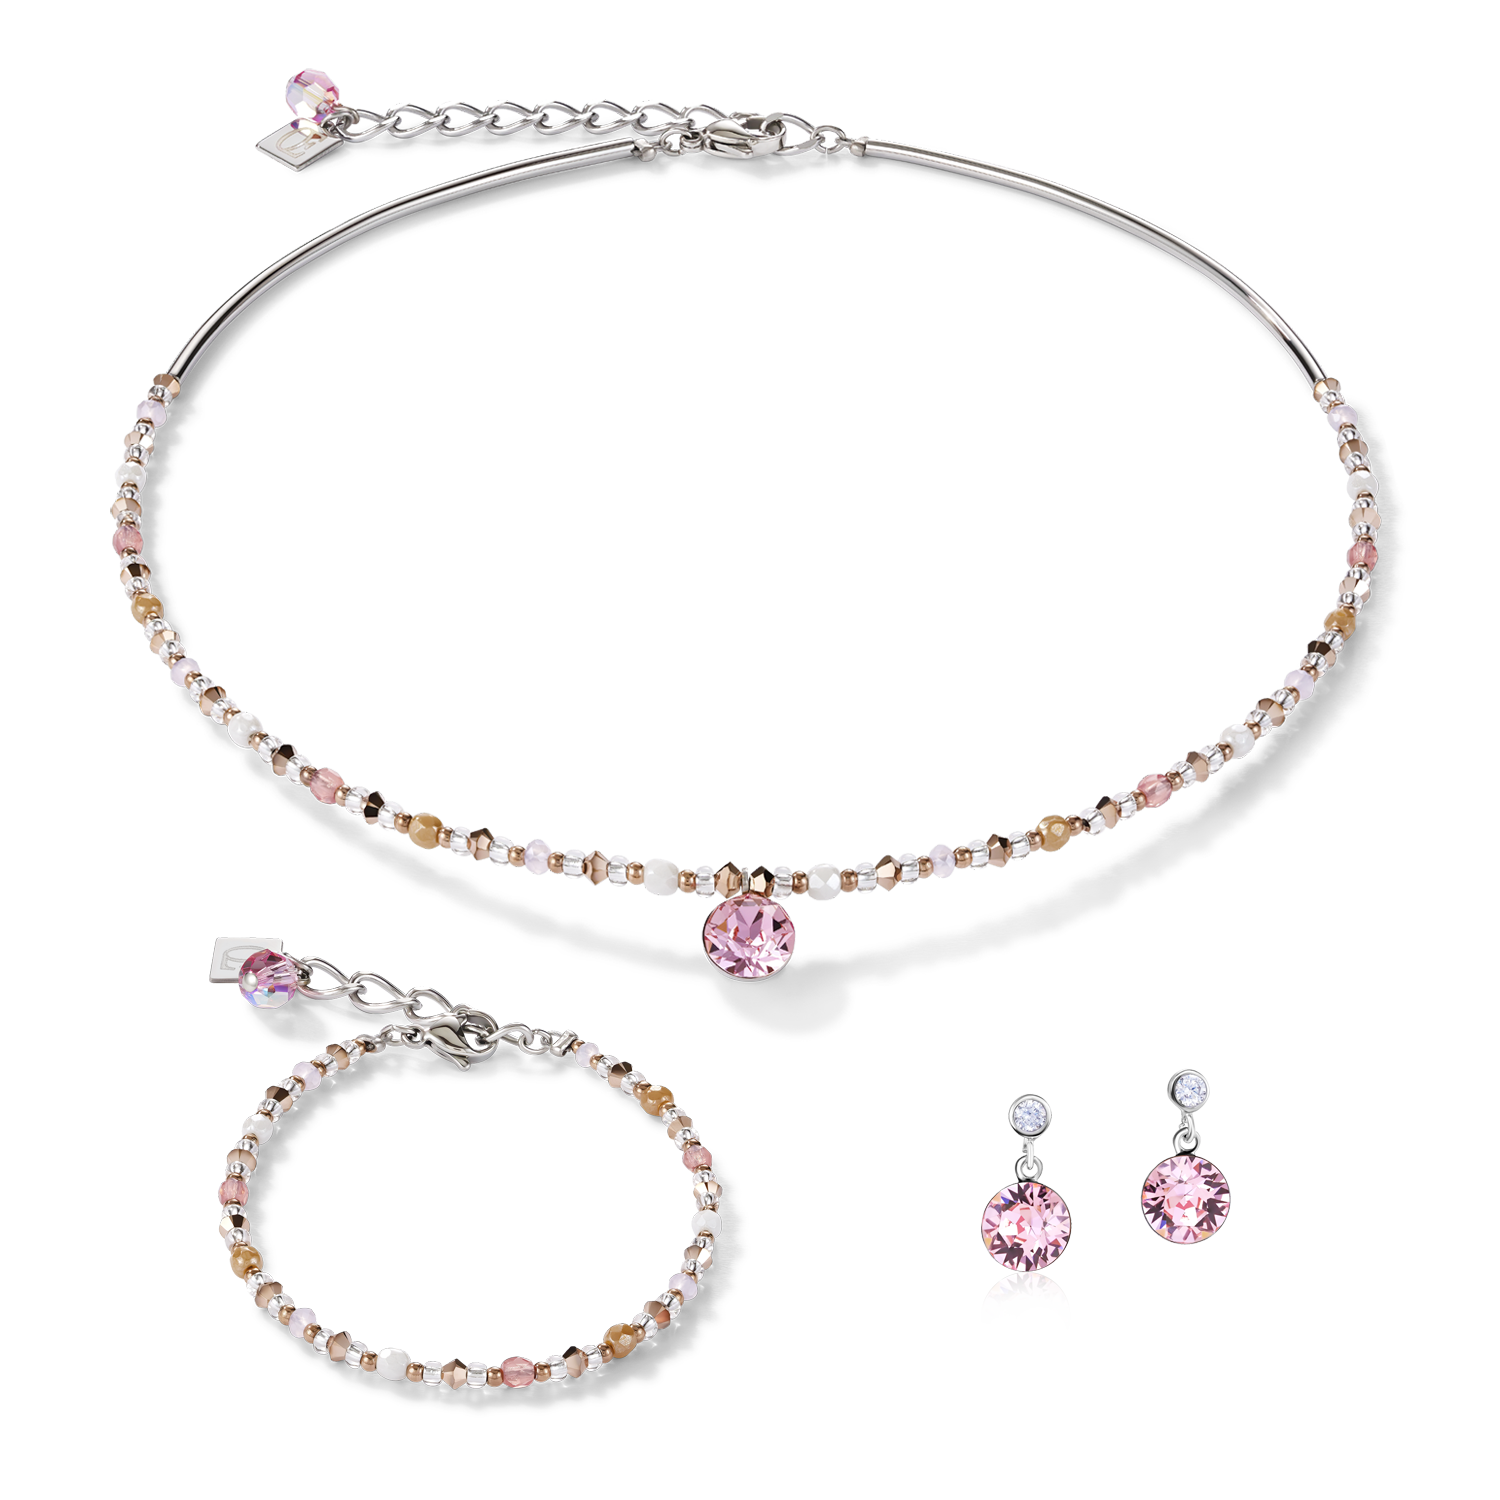 Bracelet Crystals & stainless steel light rose